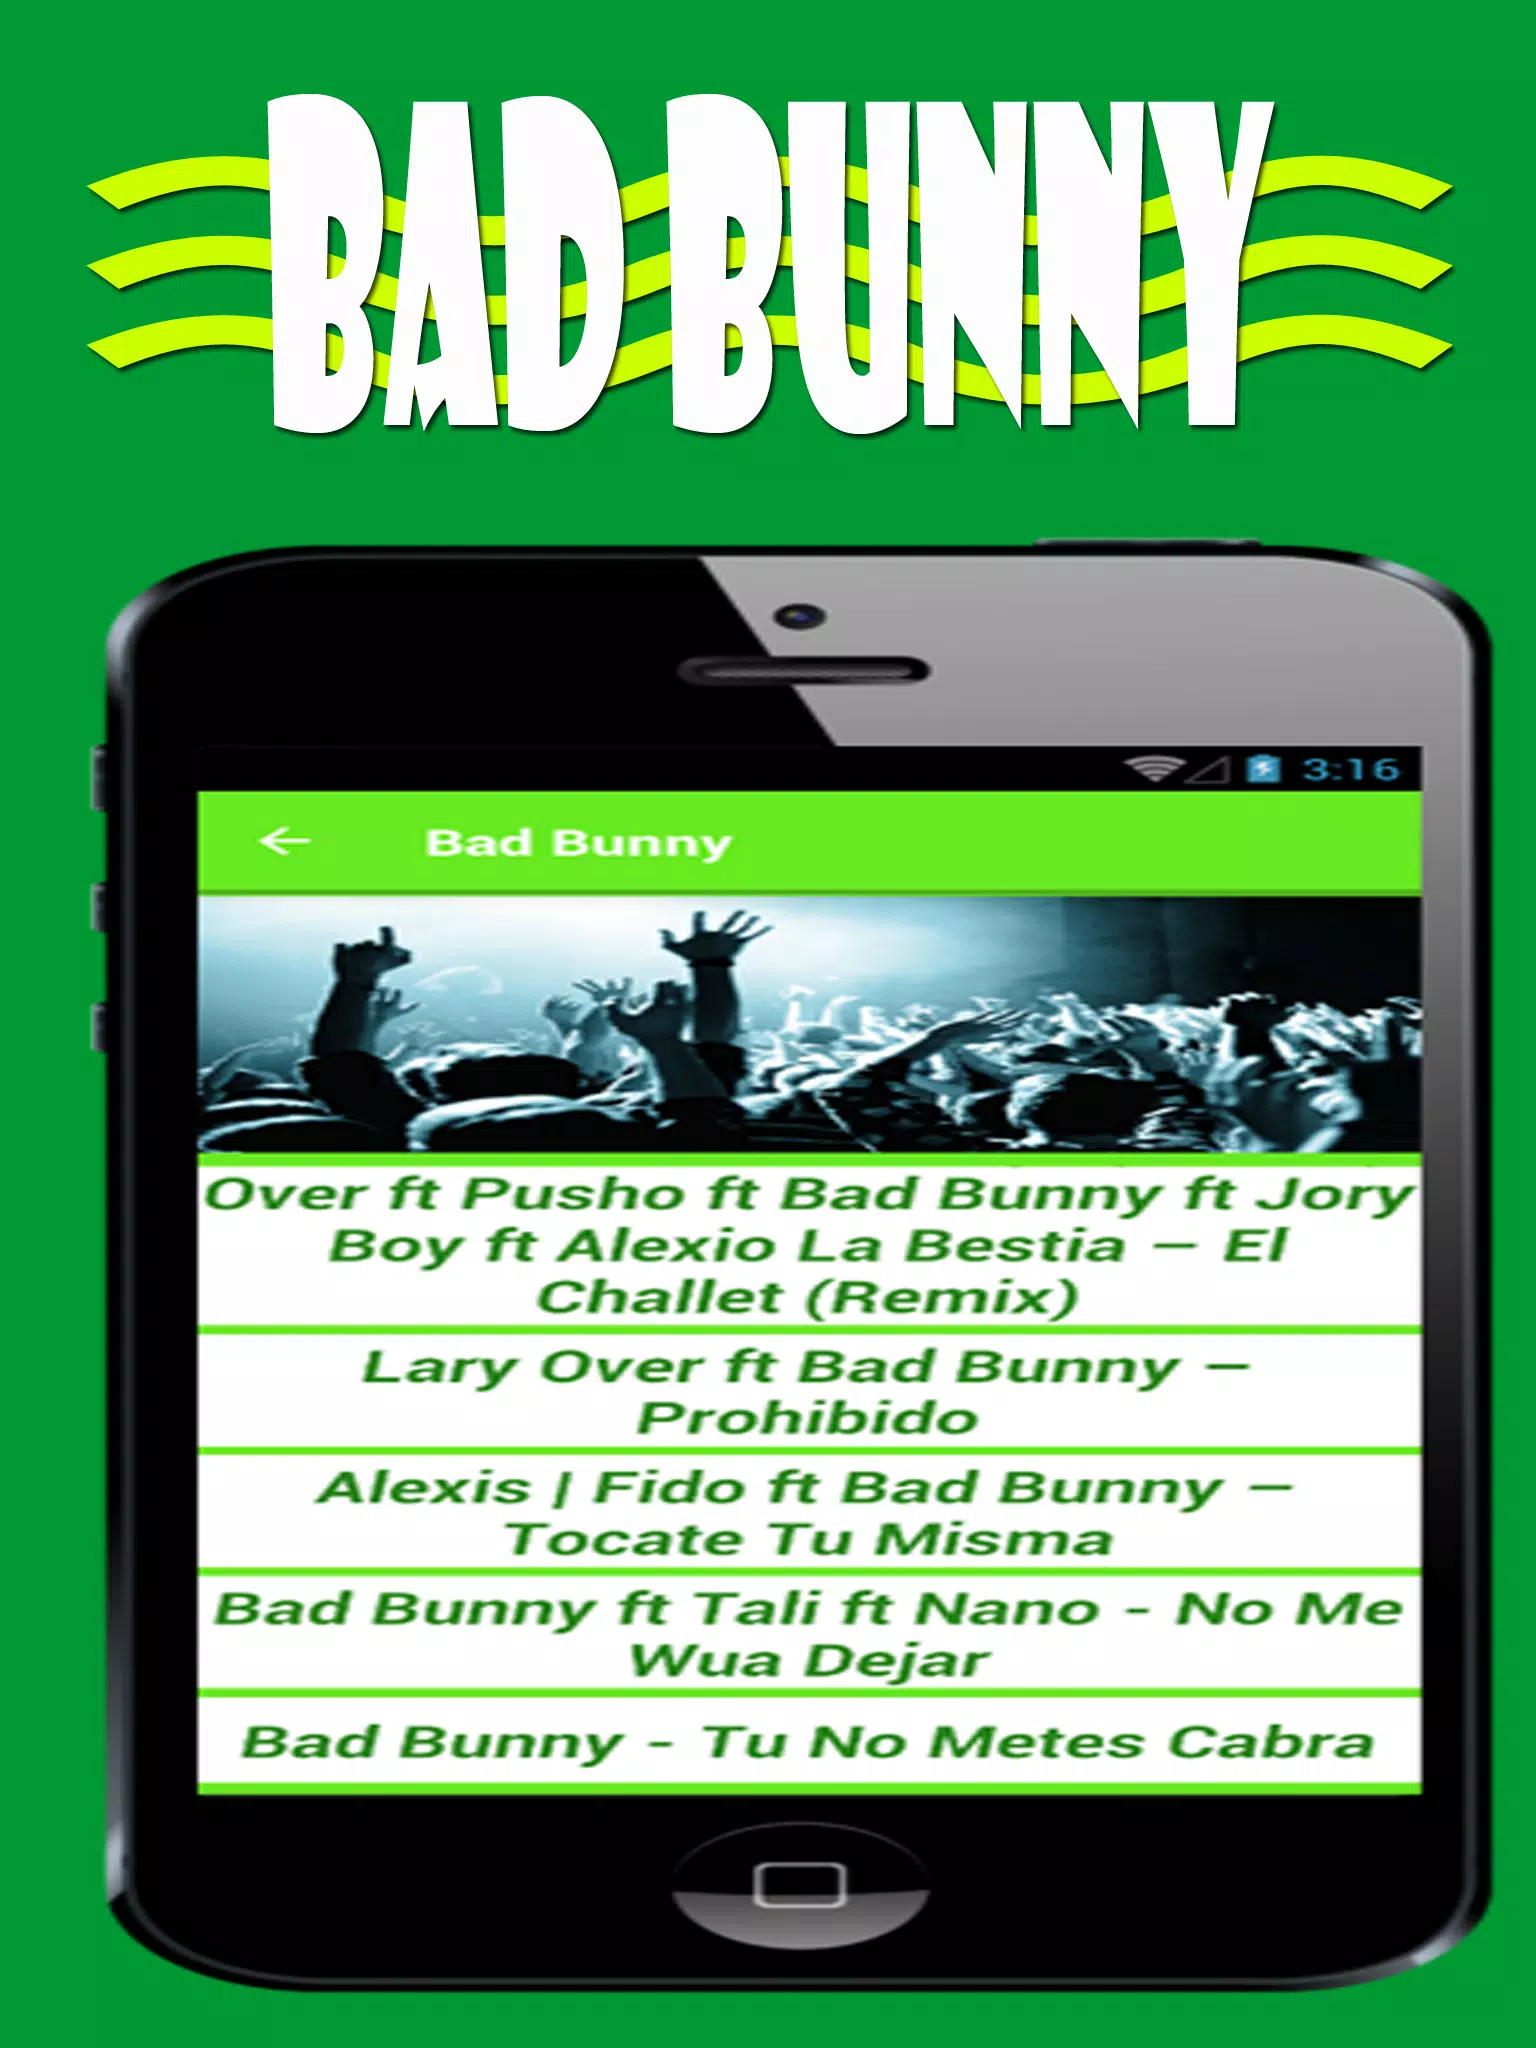 Bad Bunny Music - Tu No Metes Cabra for Android - APK Download